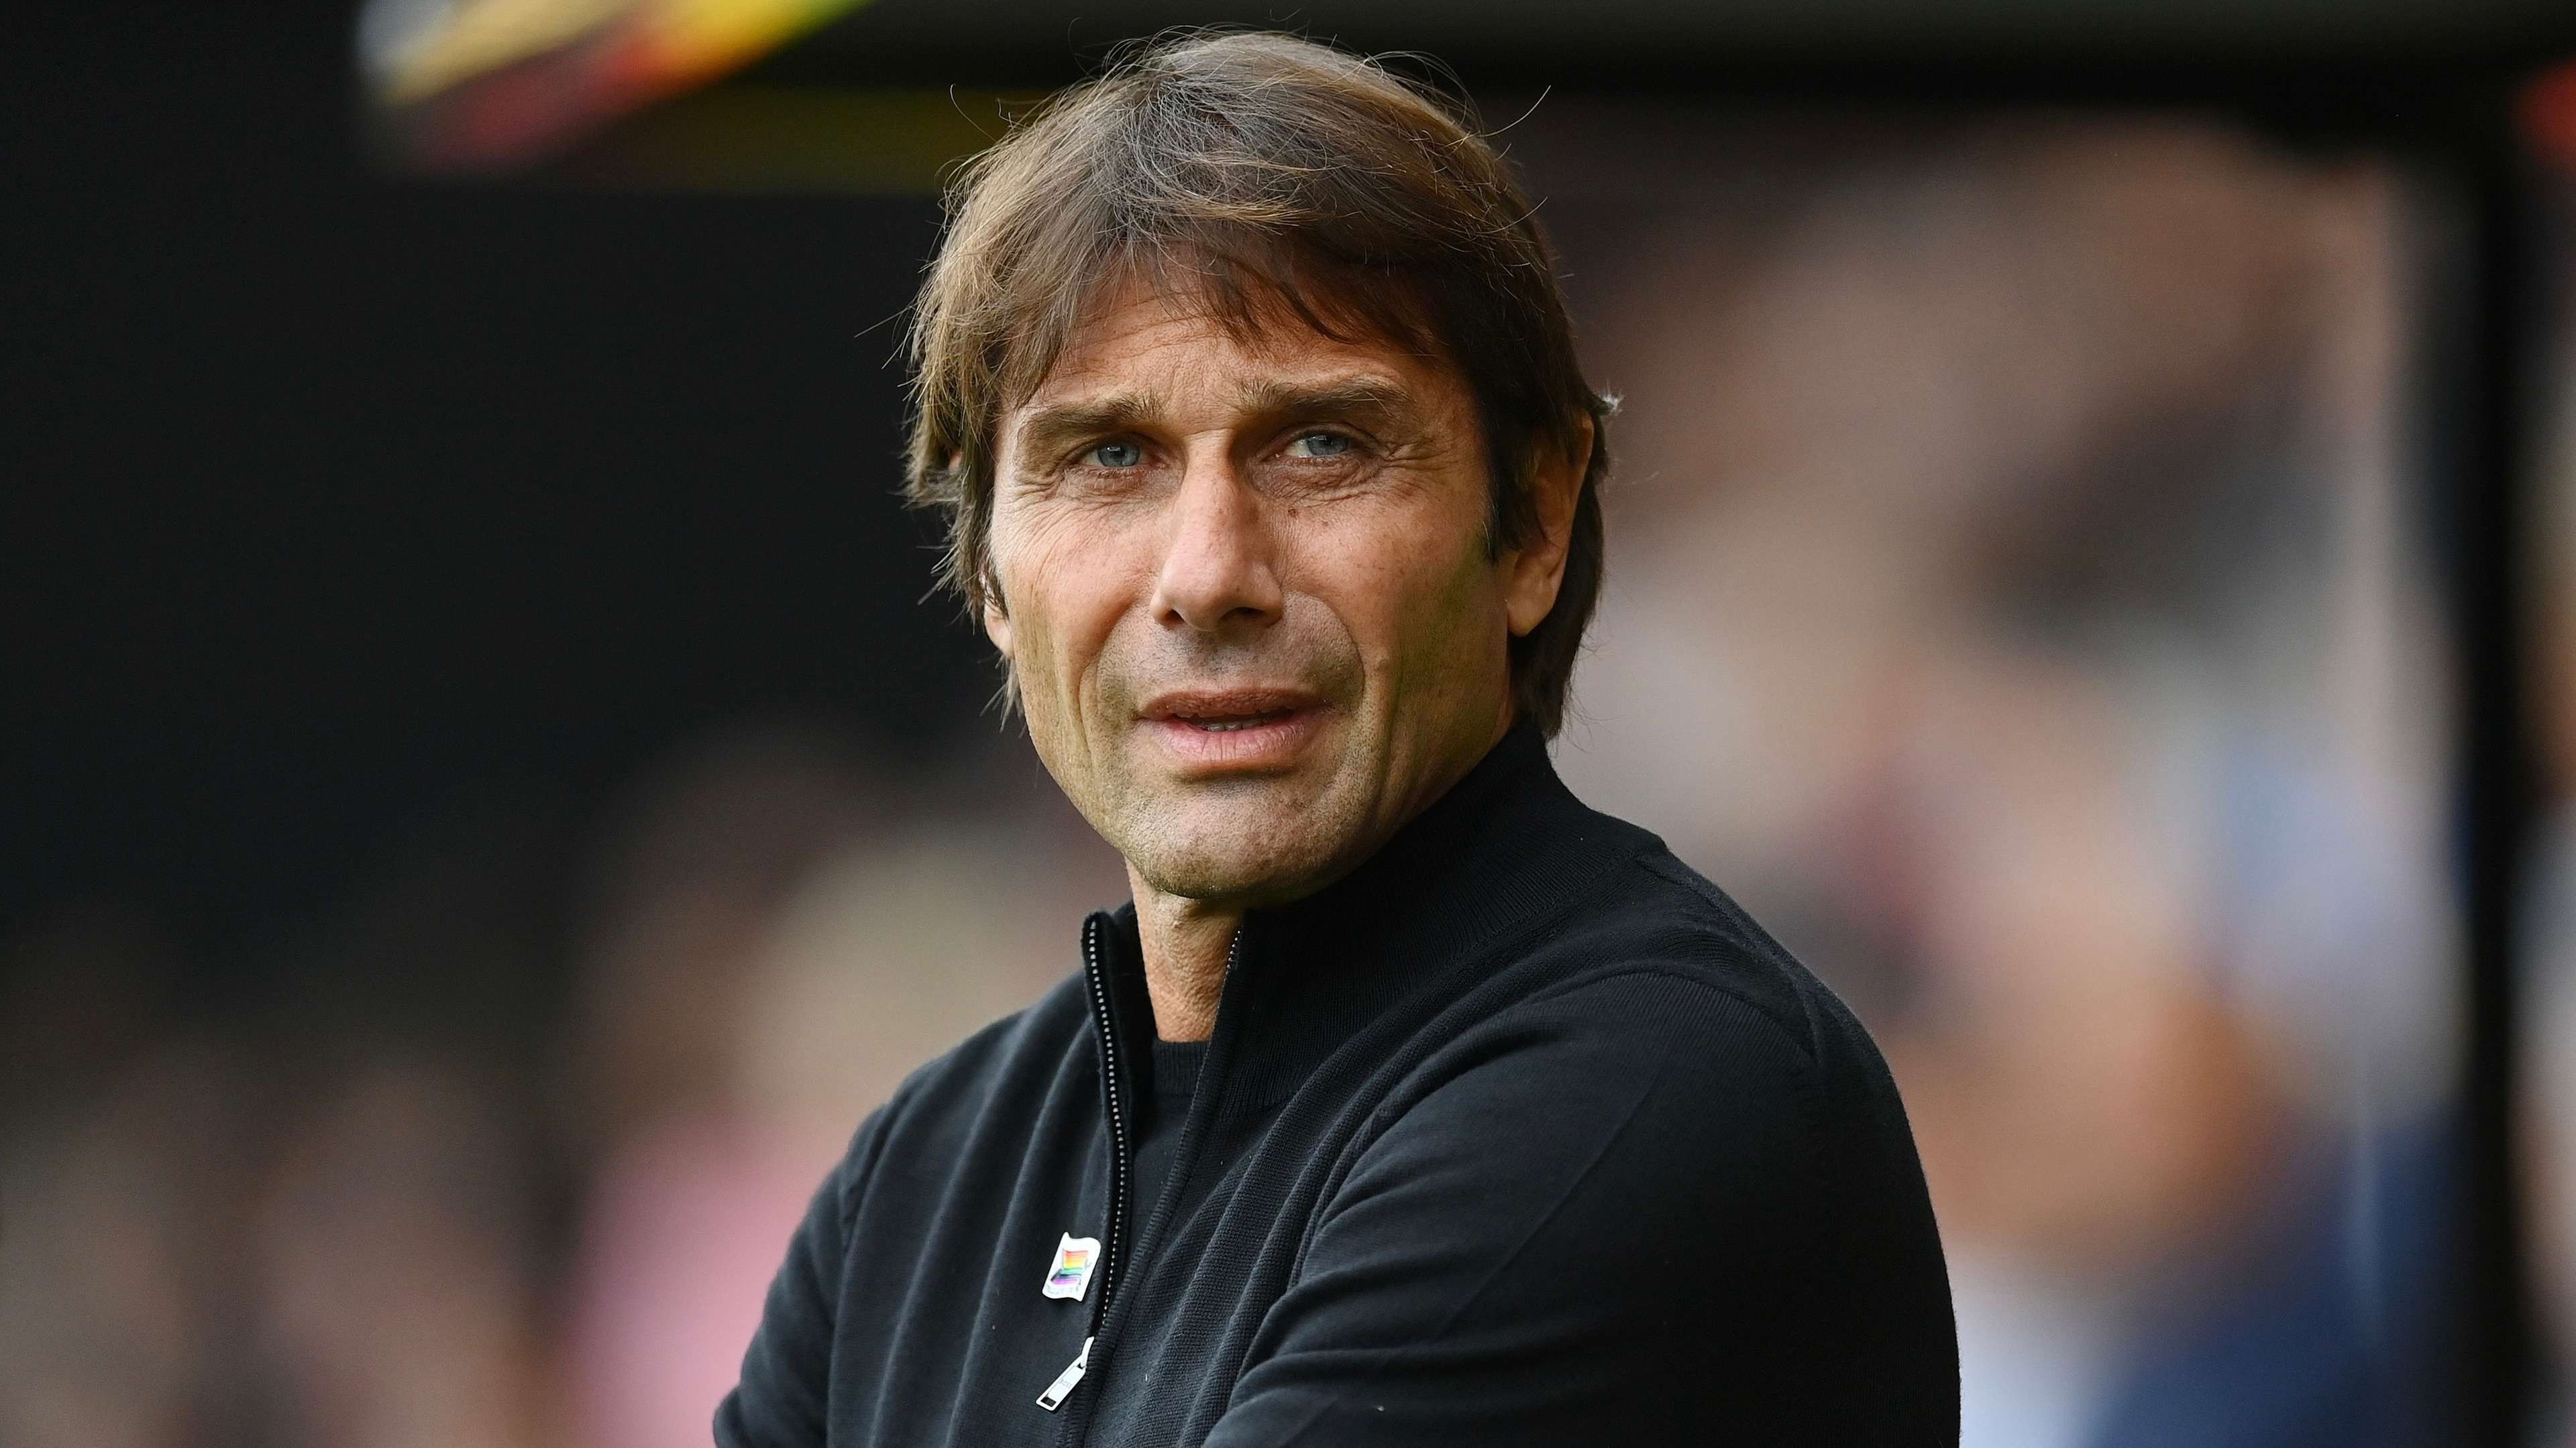 Chelsea Offers Antonio Conte To Lead The Team Again